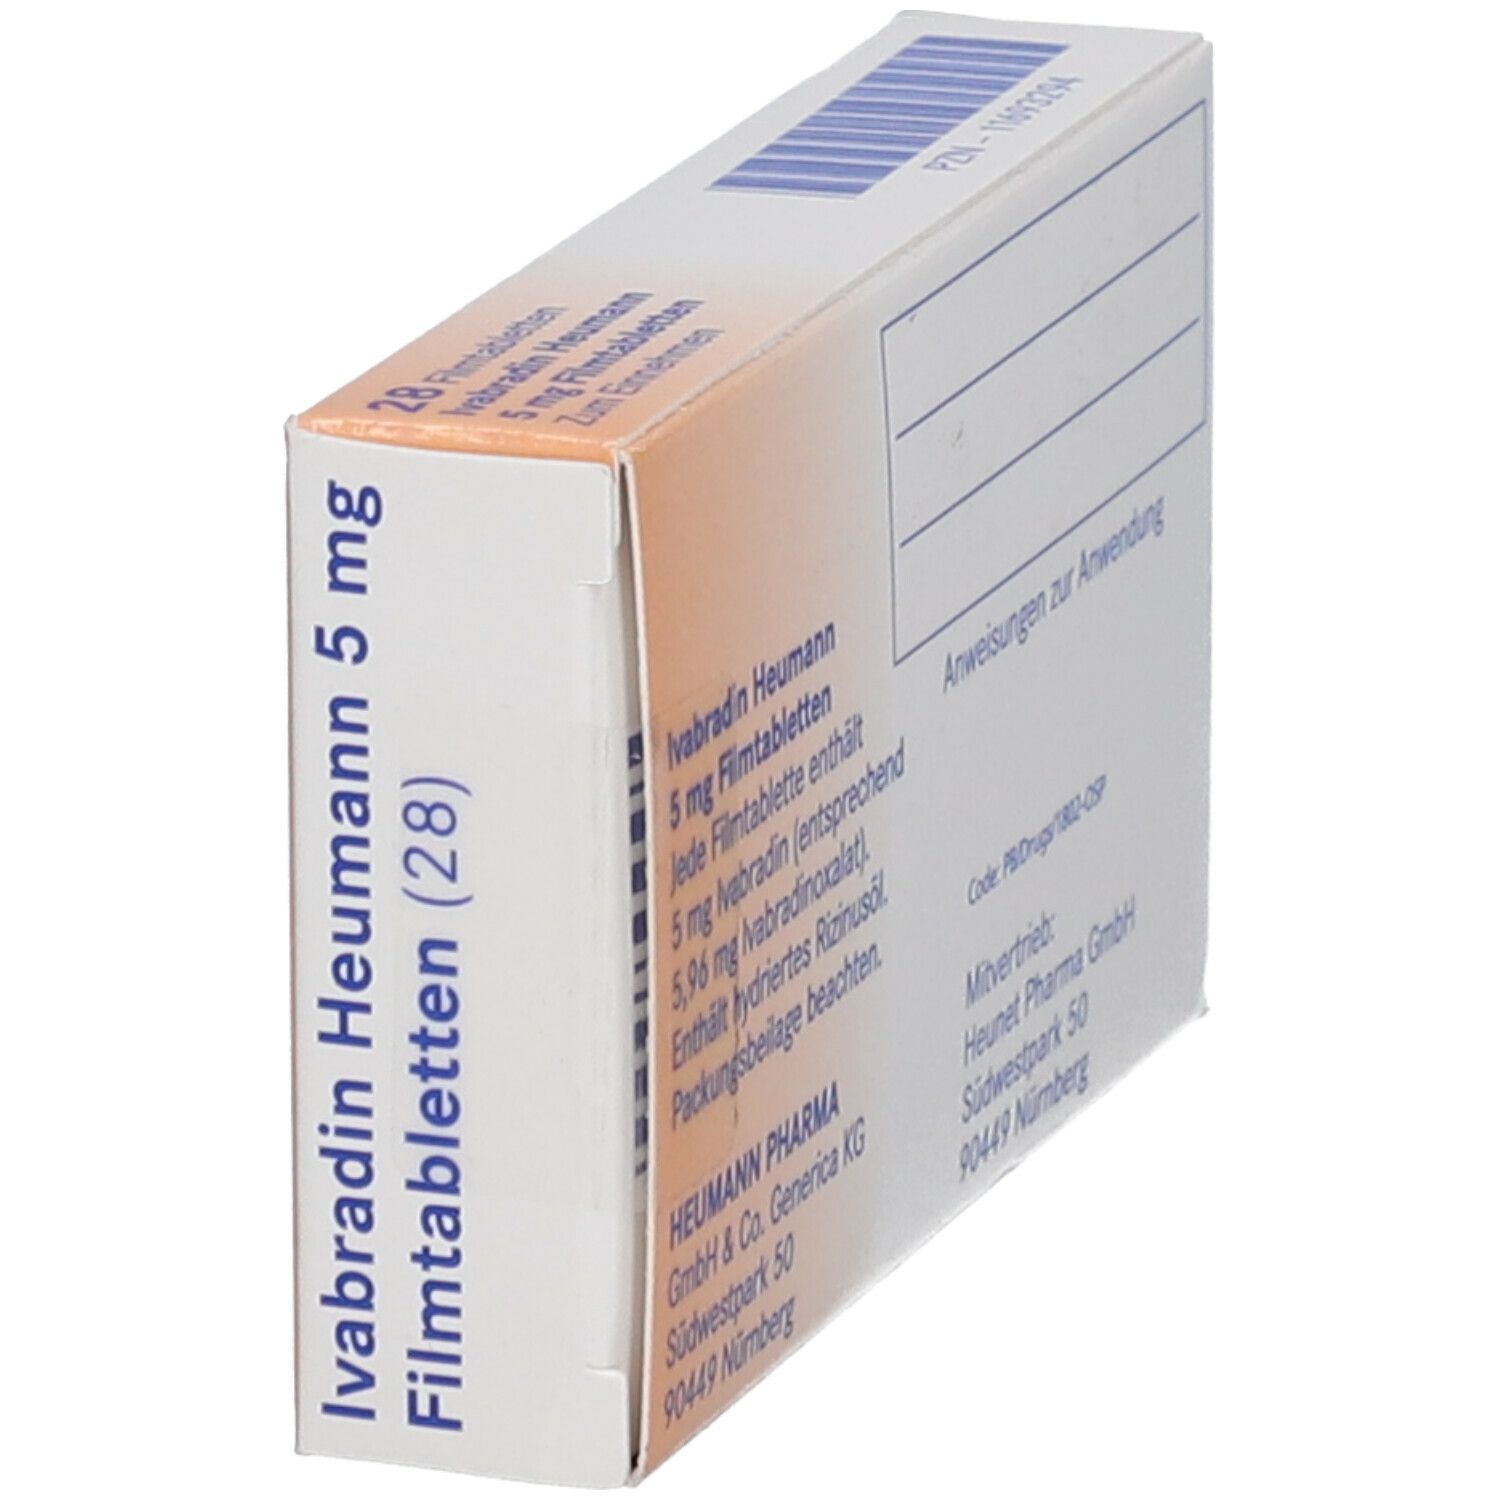 Ivabradin Heumann 5 mg